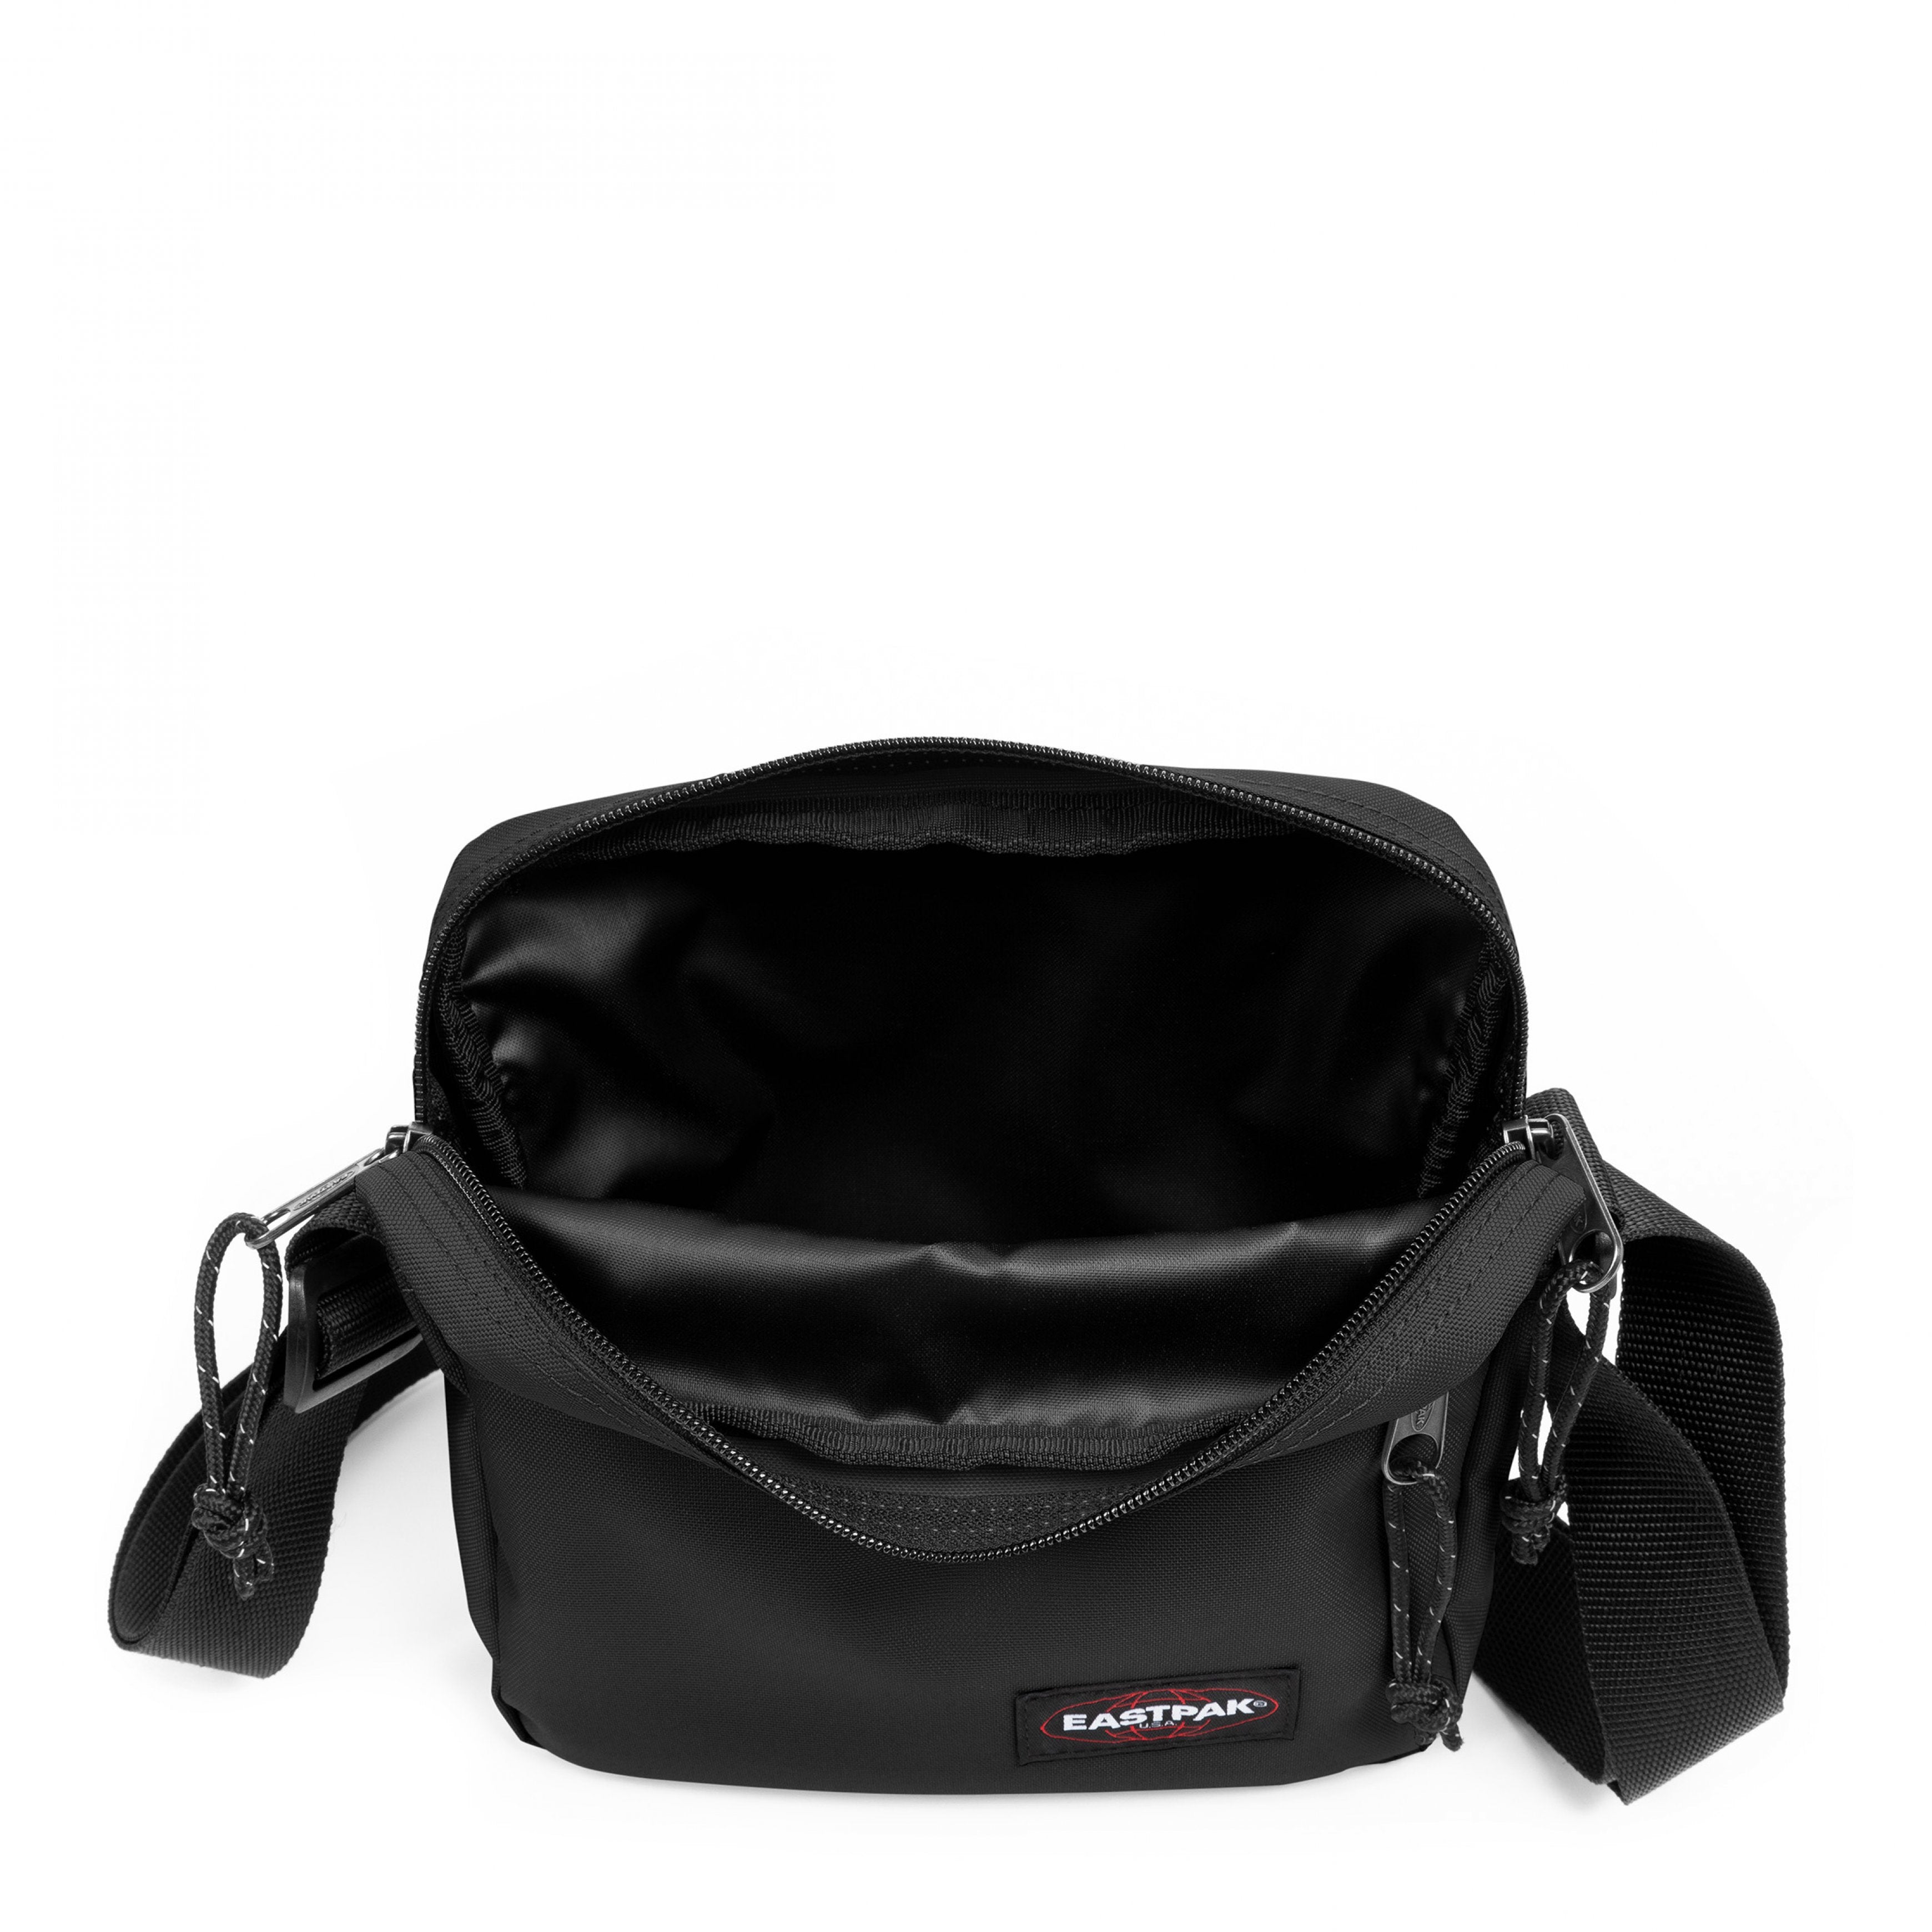 Eastpak-The Bigger One-Large Crossbody bag-Black-EK0A5BIB0081